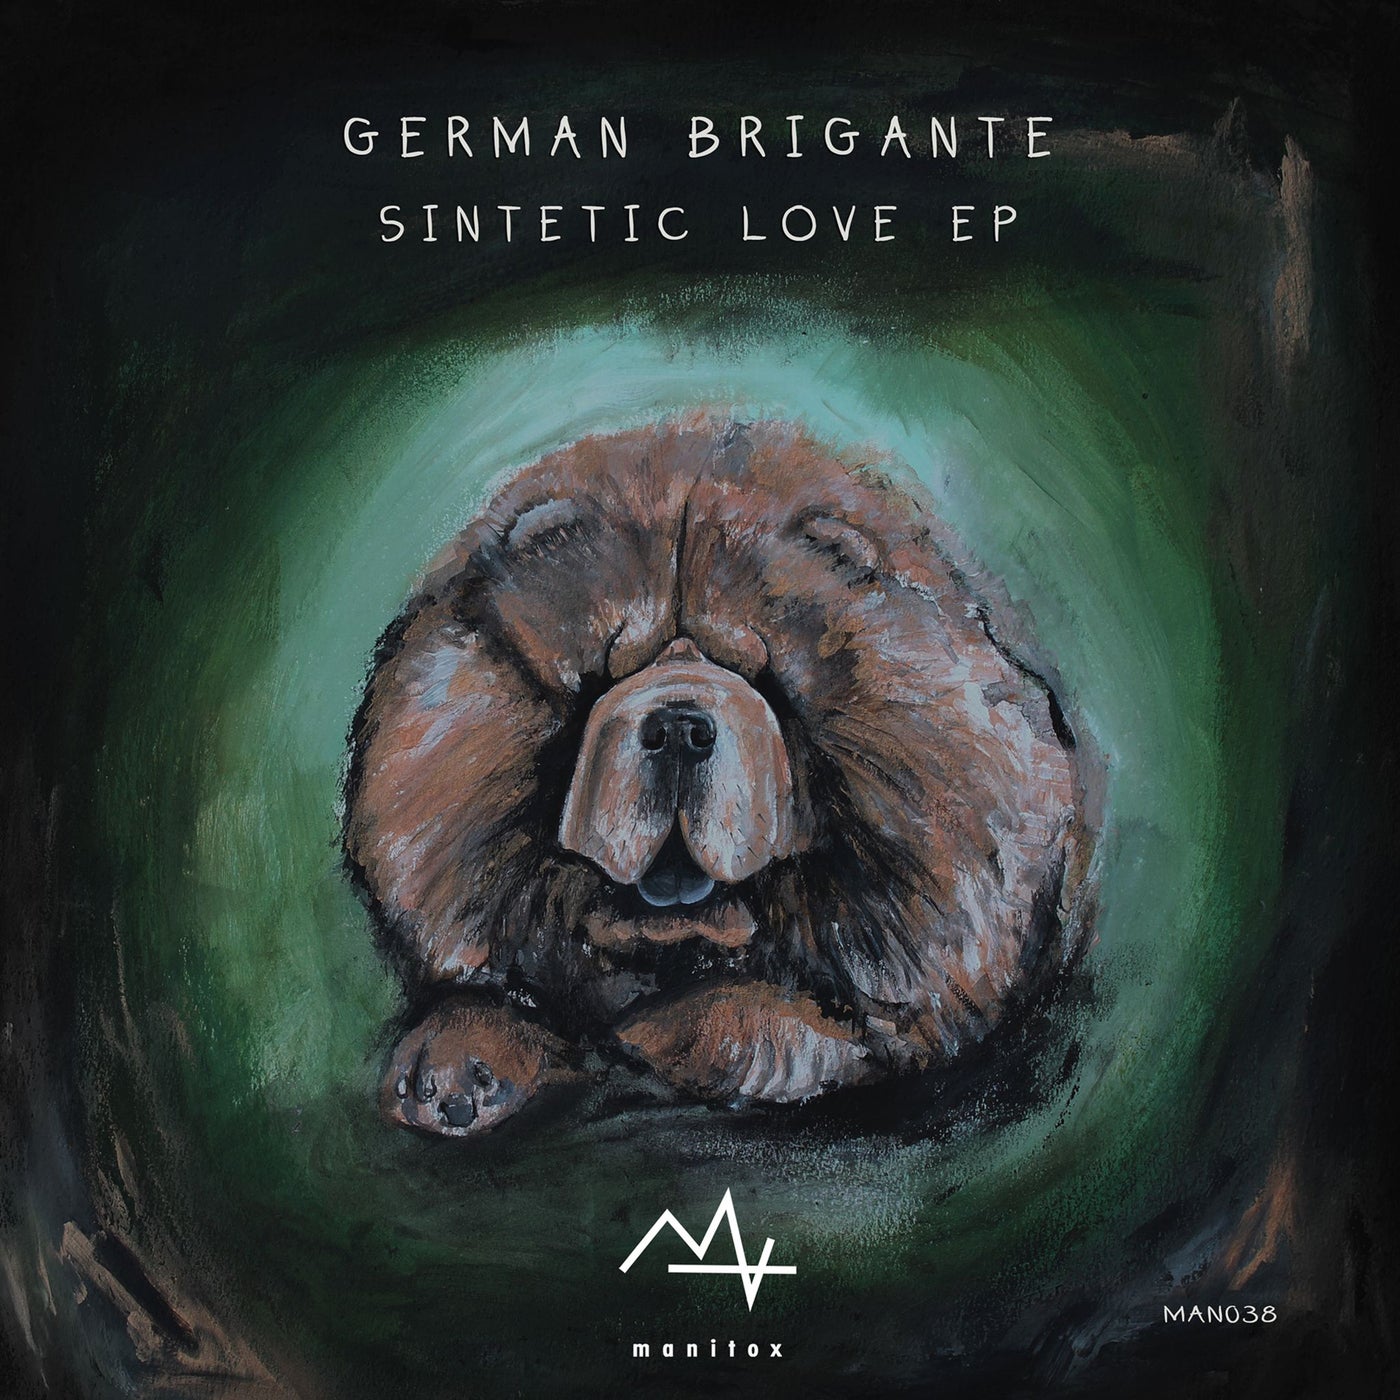 German Brigante – Sintetic Love EP [MAN038]